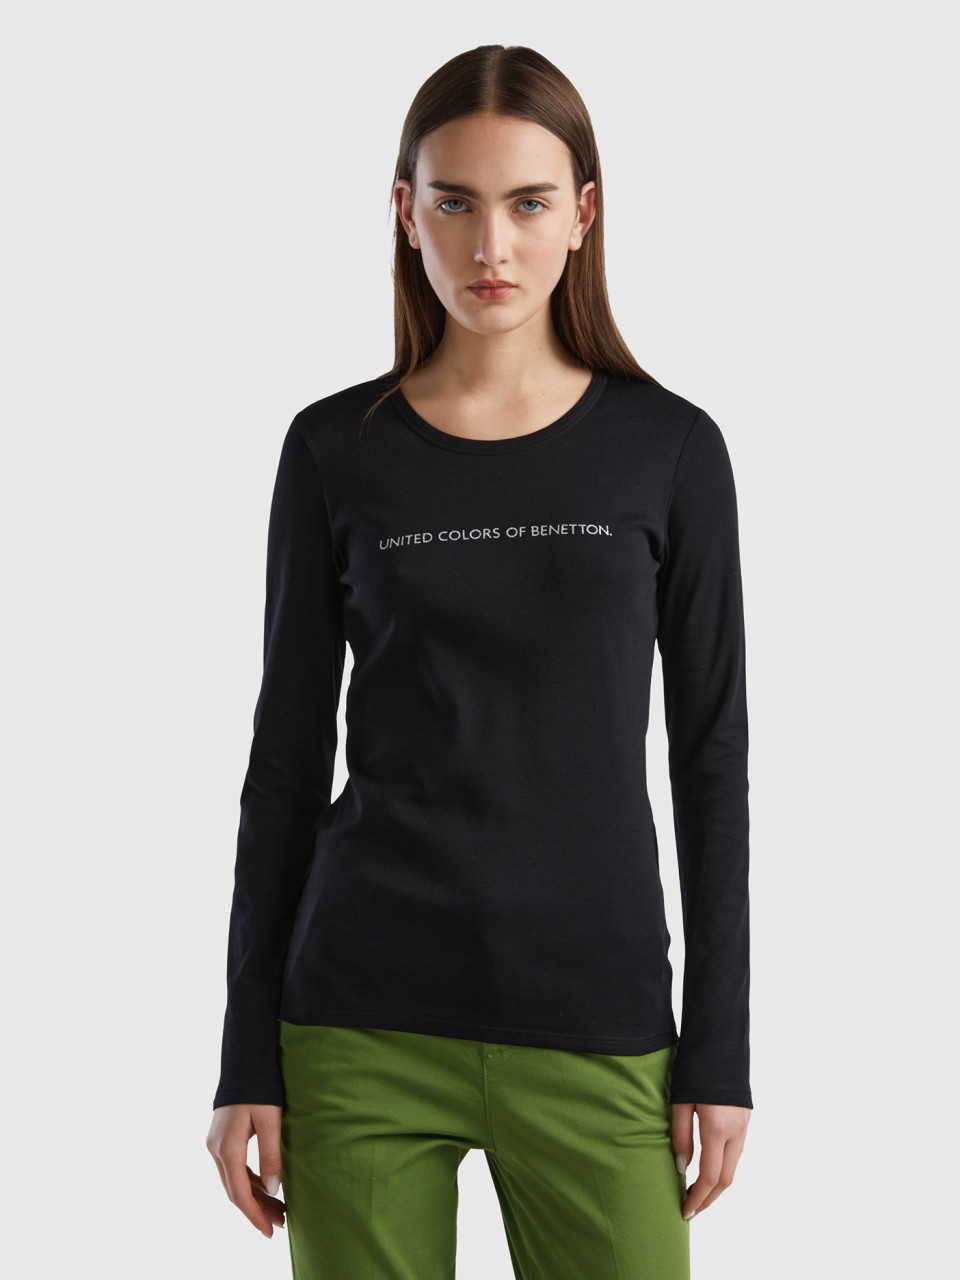 Benetton, Camiseta Negra De Manga Larga De 100 % Algodón, Negro, Mujer